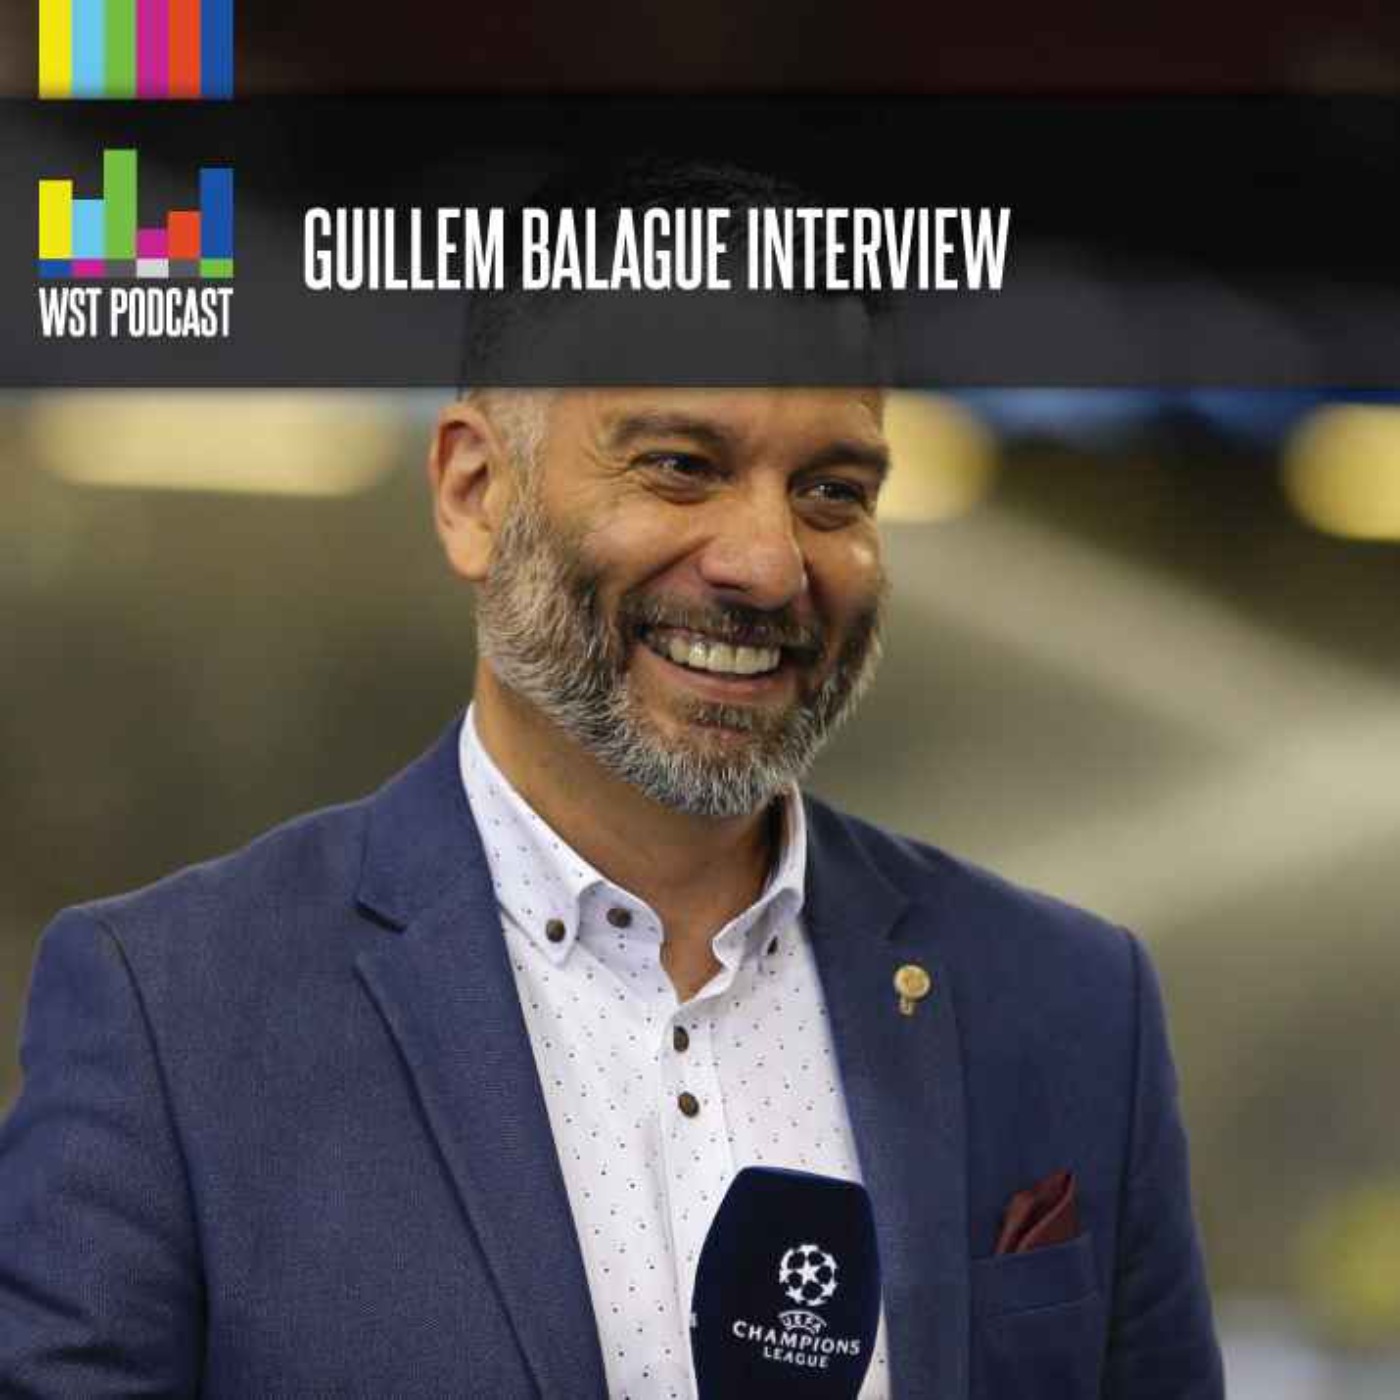 Guillem Balague interview about Champions League documentary